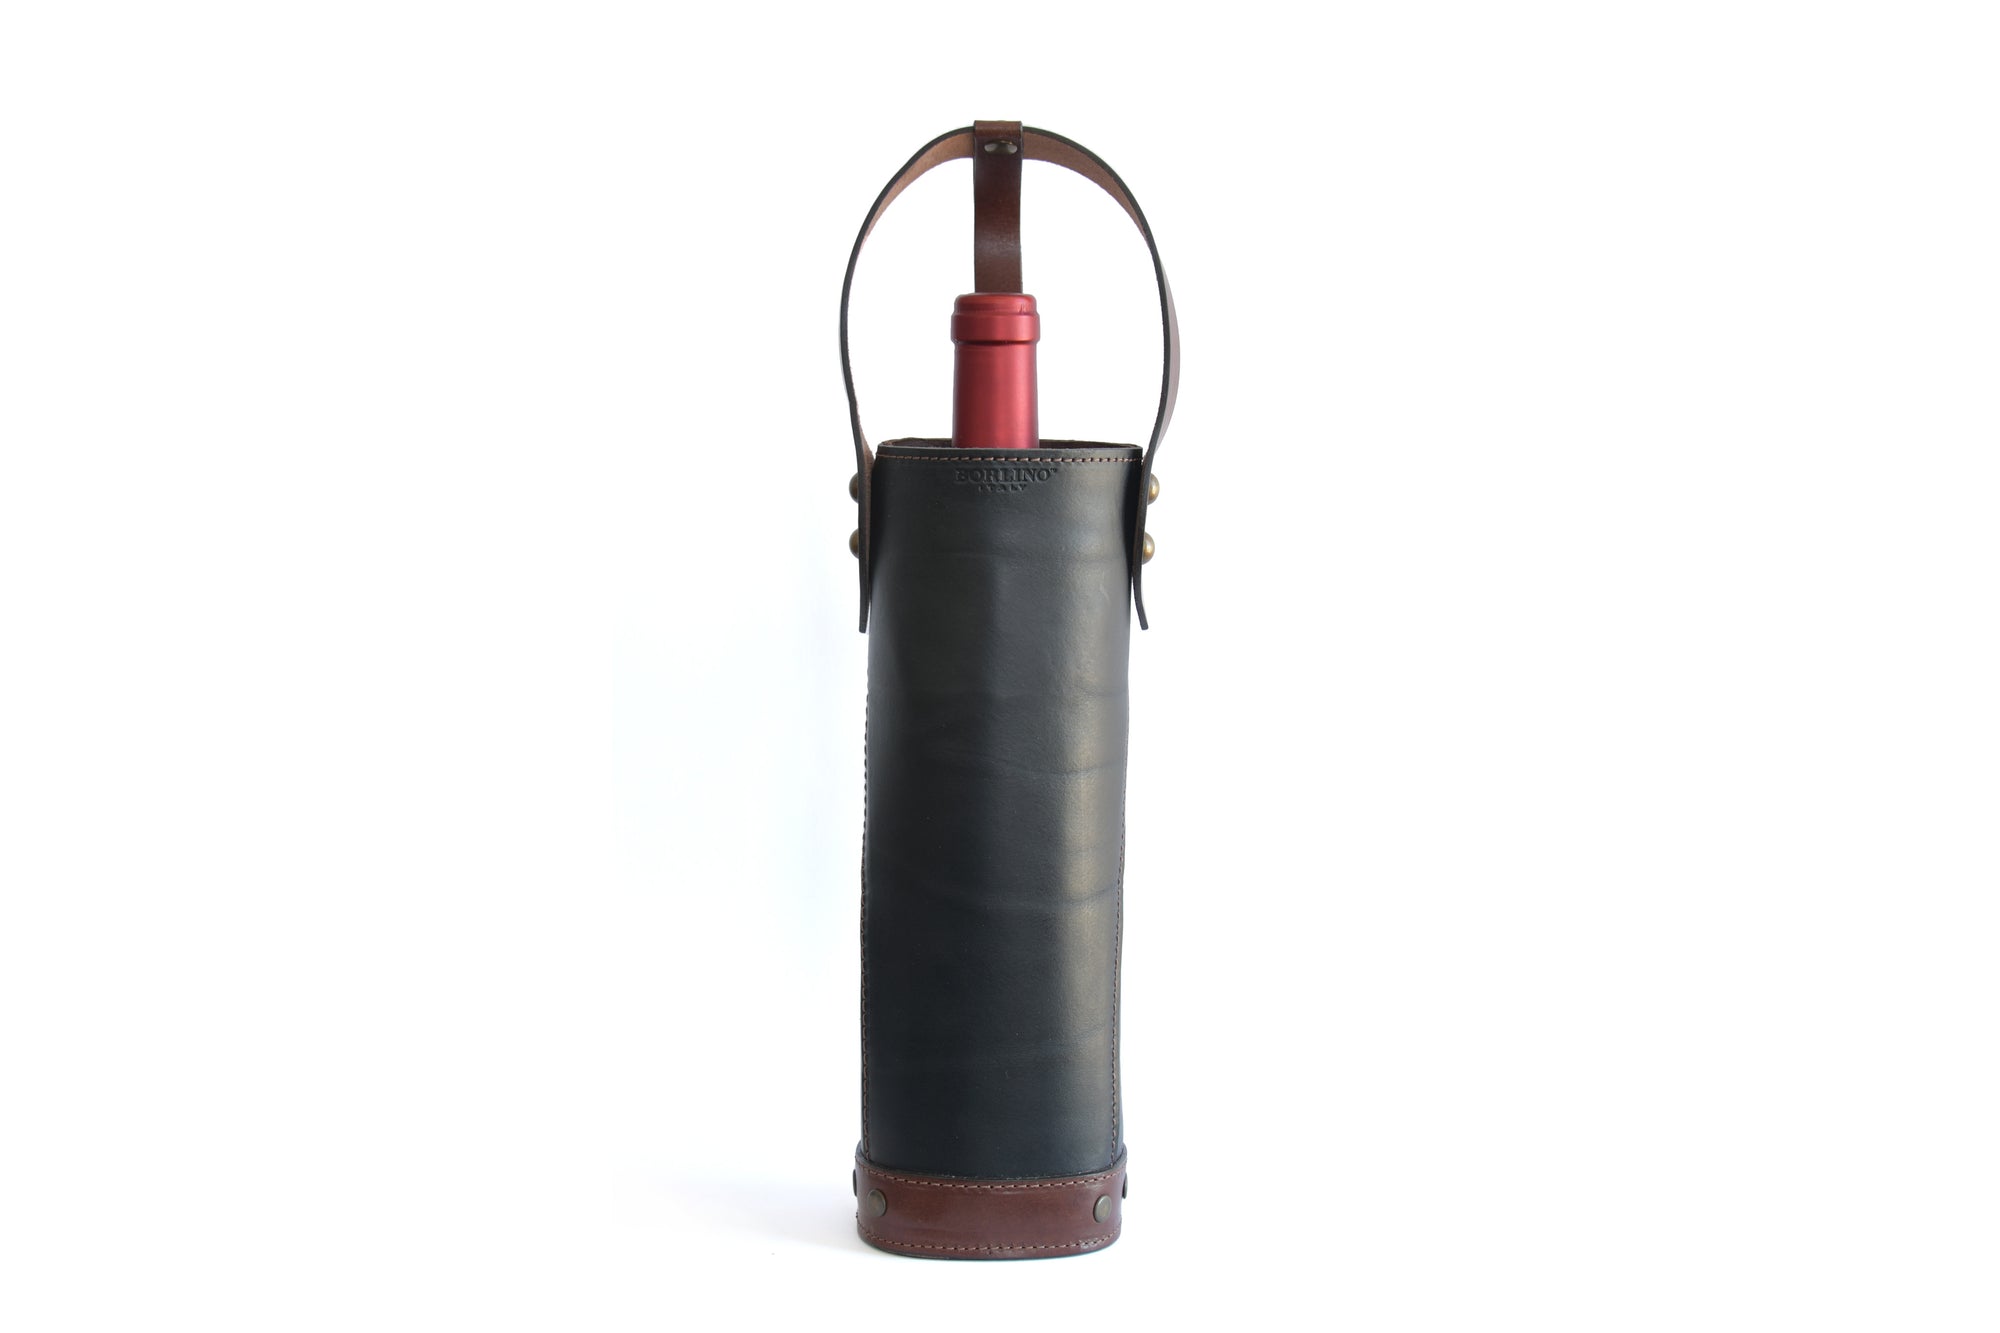 Italian Leather Wine Carrier - Vachetta Leathers - Walnut Brown and Onyx Black